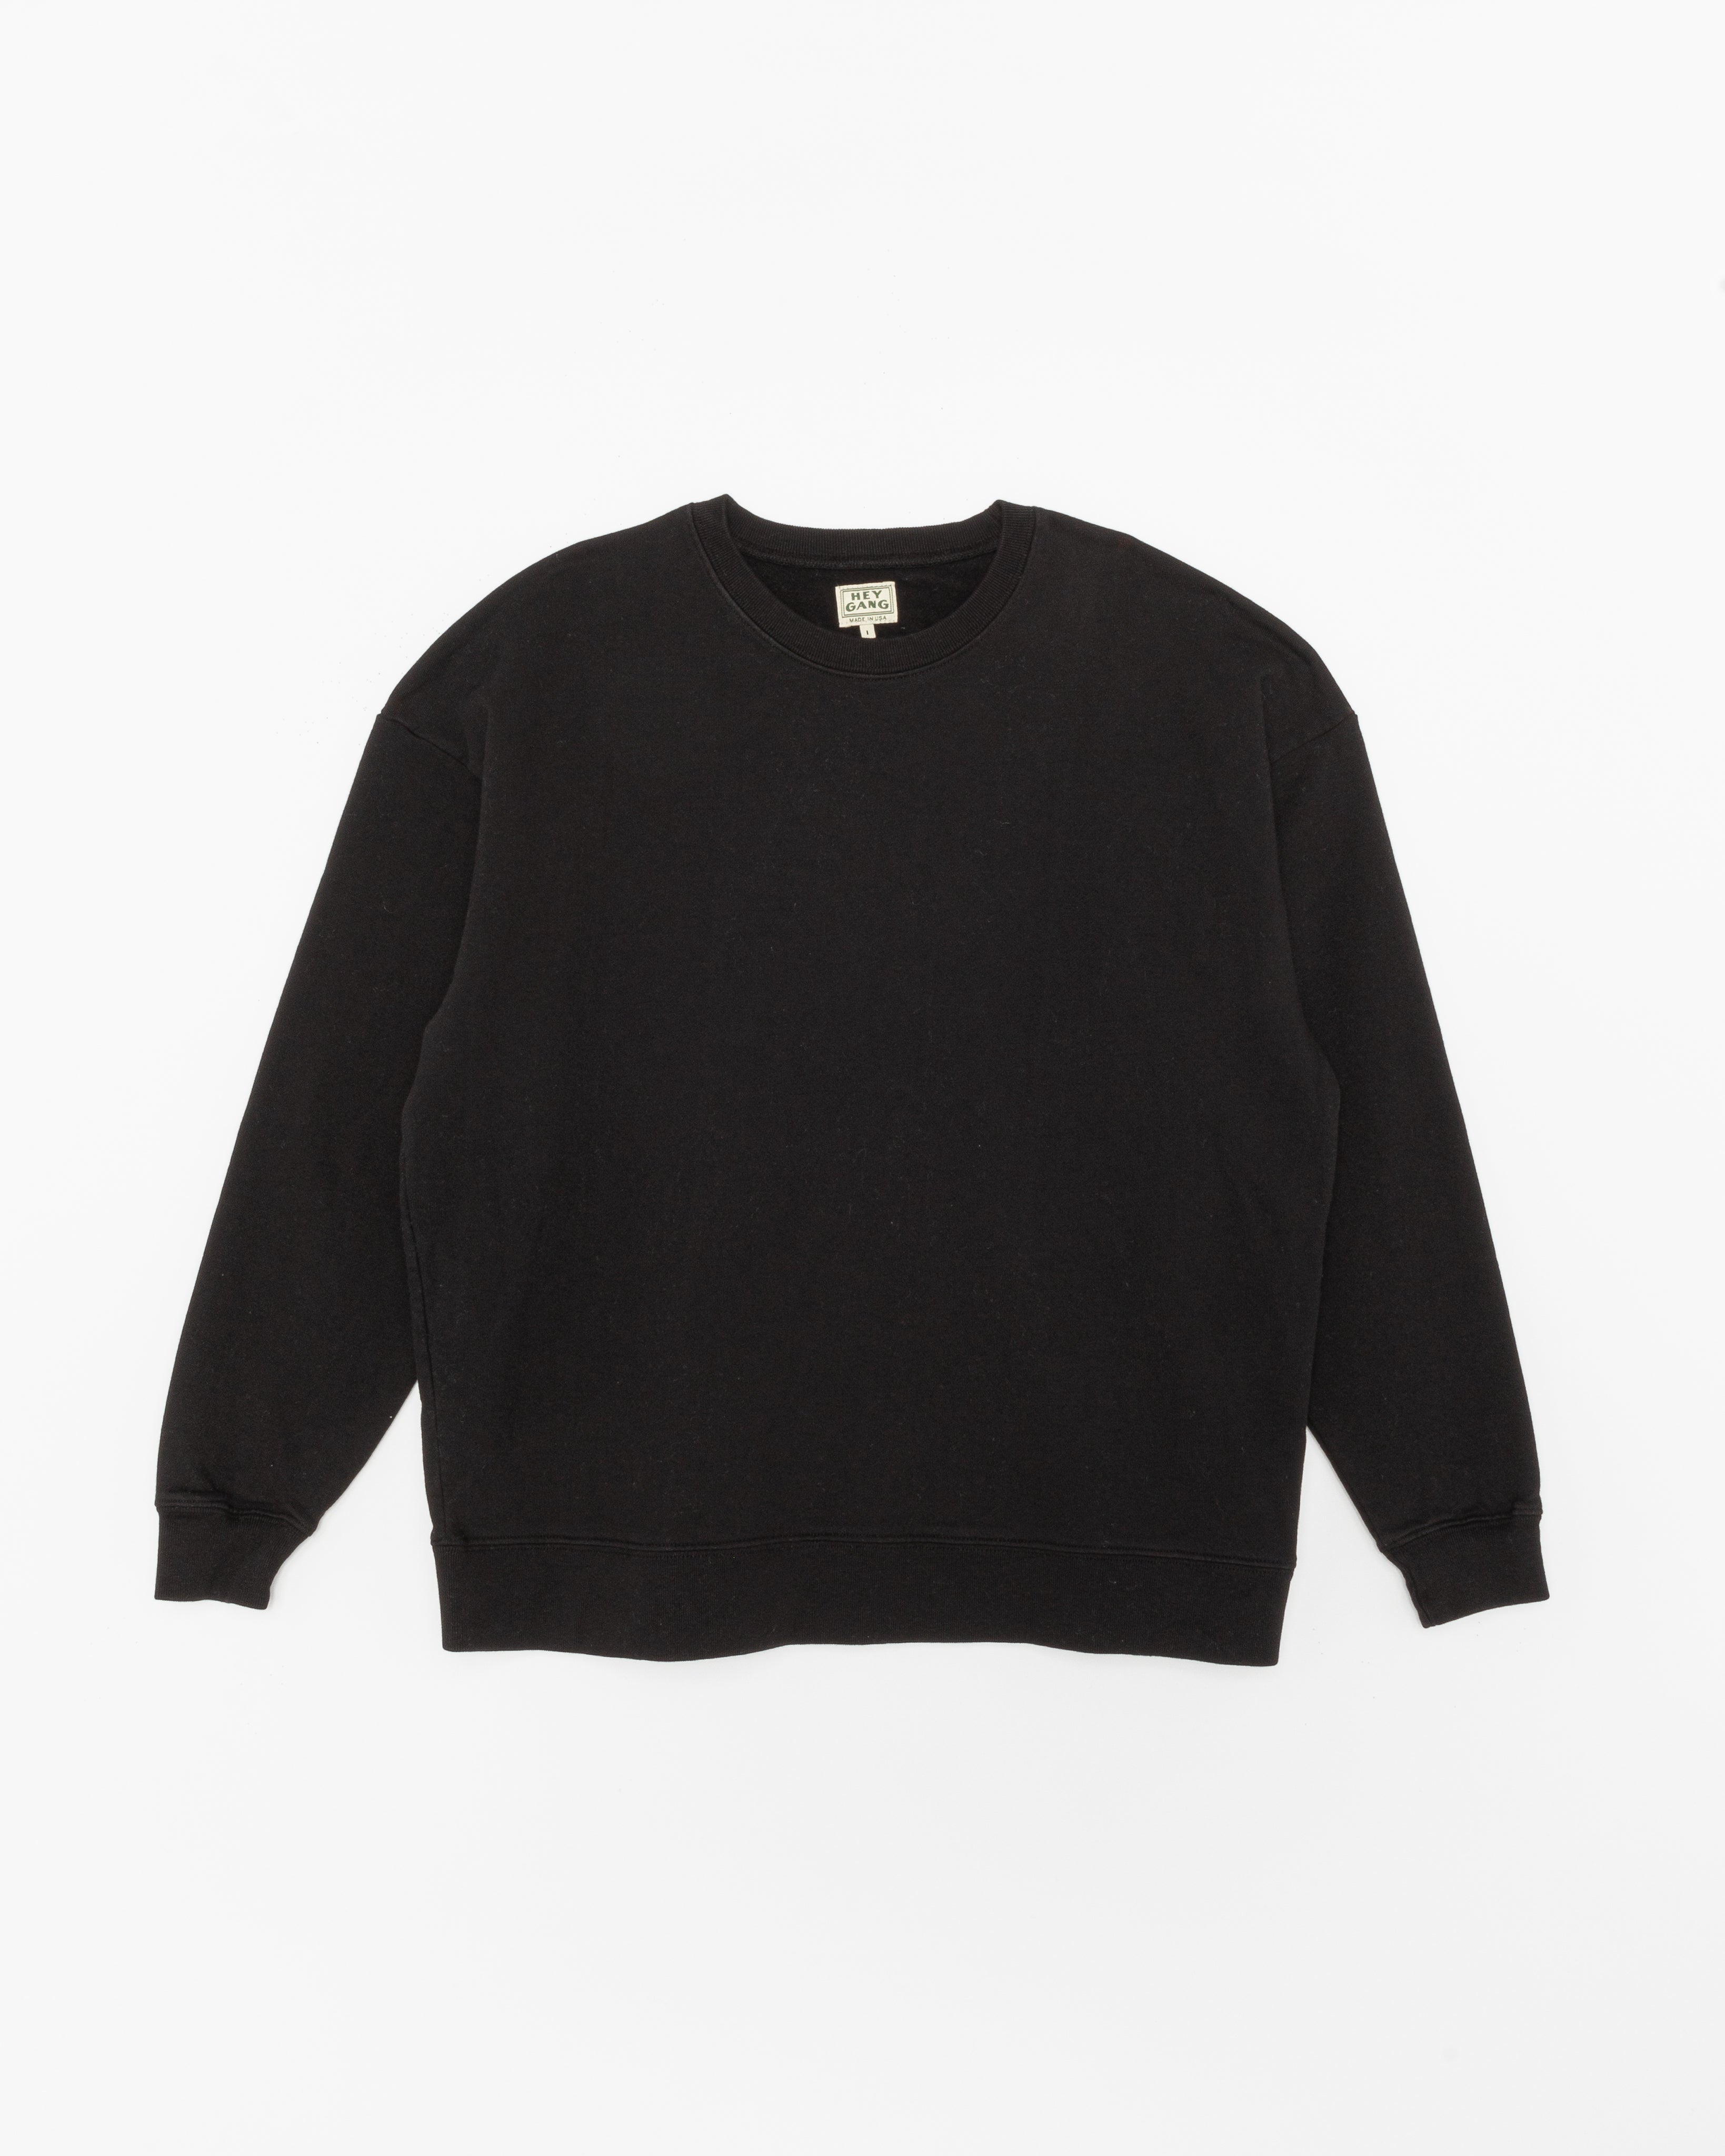 The Boxy Sweatshirt Black